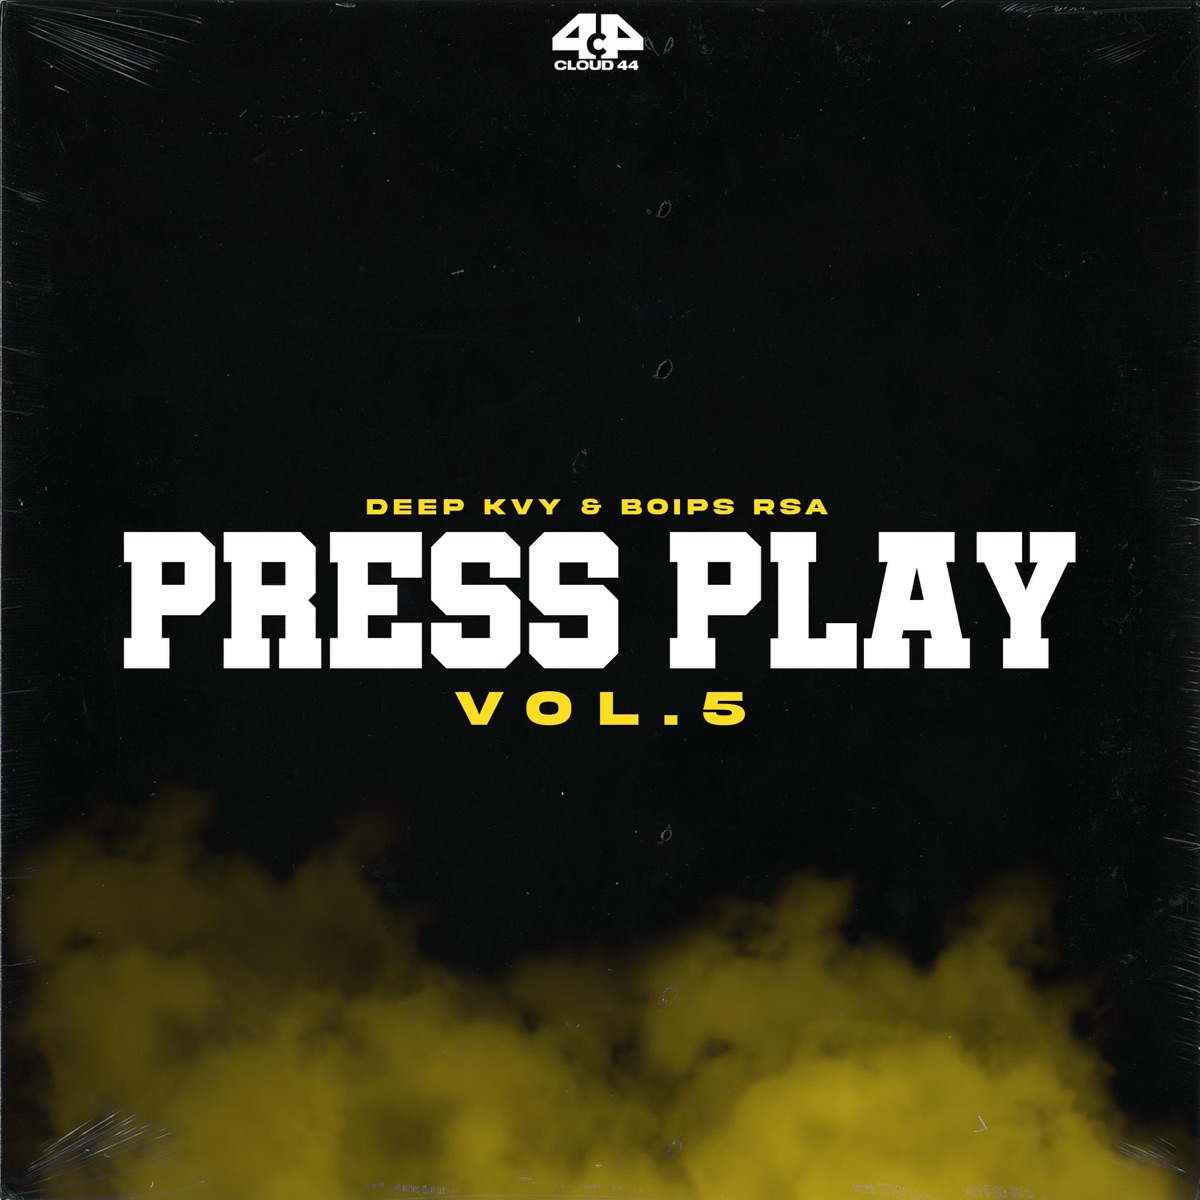 Press Play (2) Discography